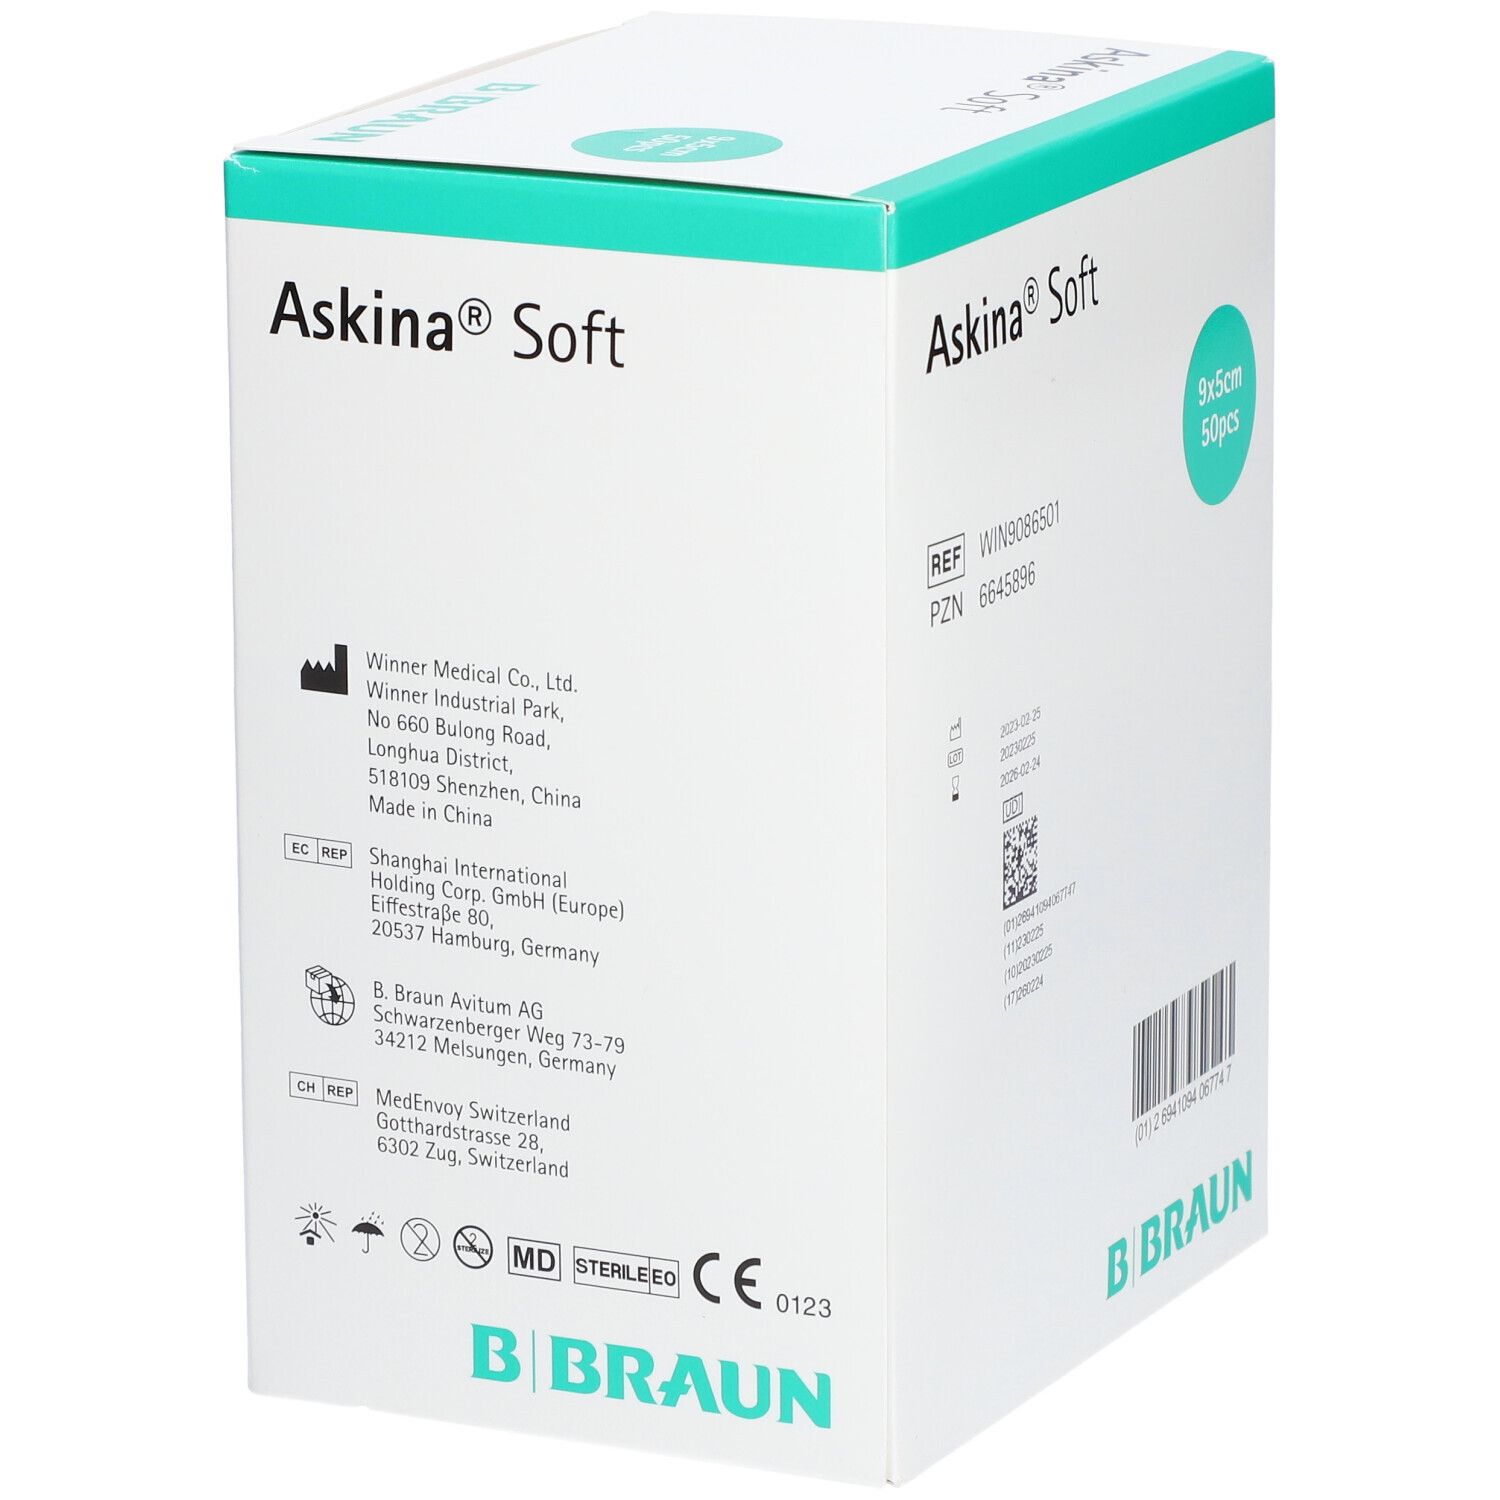 Askina® Soft Wundverband 9 x 5 cm steril